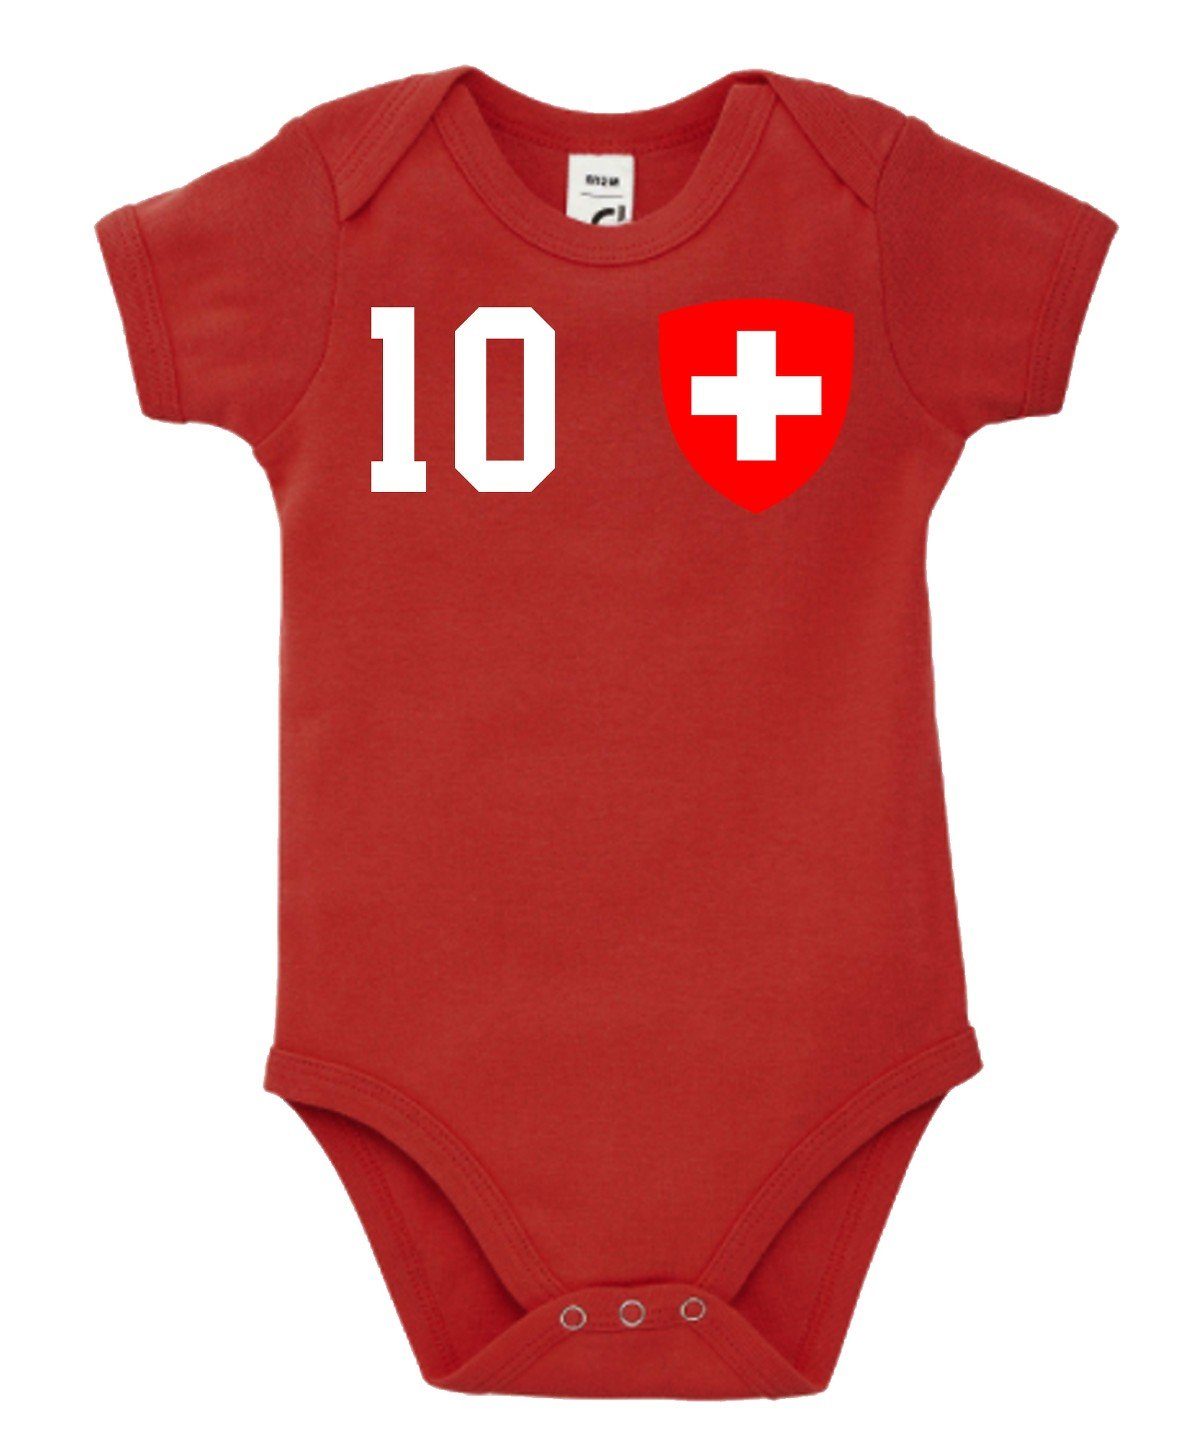 Youth Designz Kurzarmbody Schweiz Kinder Baby Body Strampler mit trendigem Motiv Rot | Shirtbodies